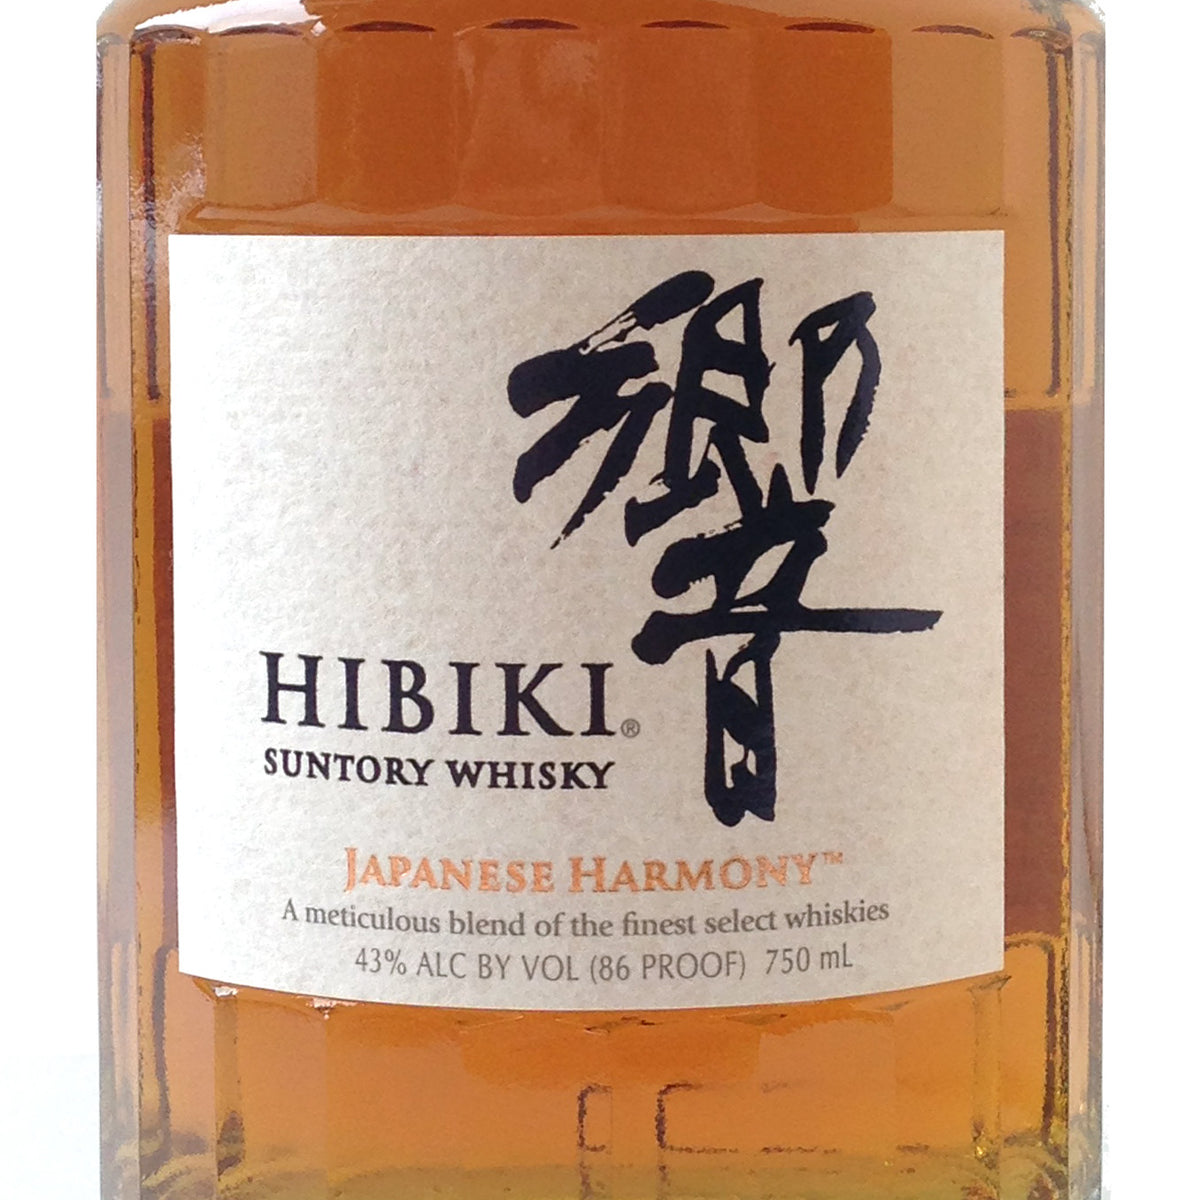 Hibiki 'Japanese Harmony' Blended Whisky, Japan